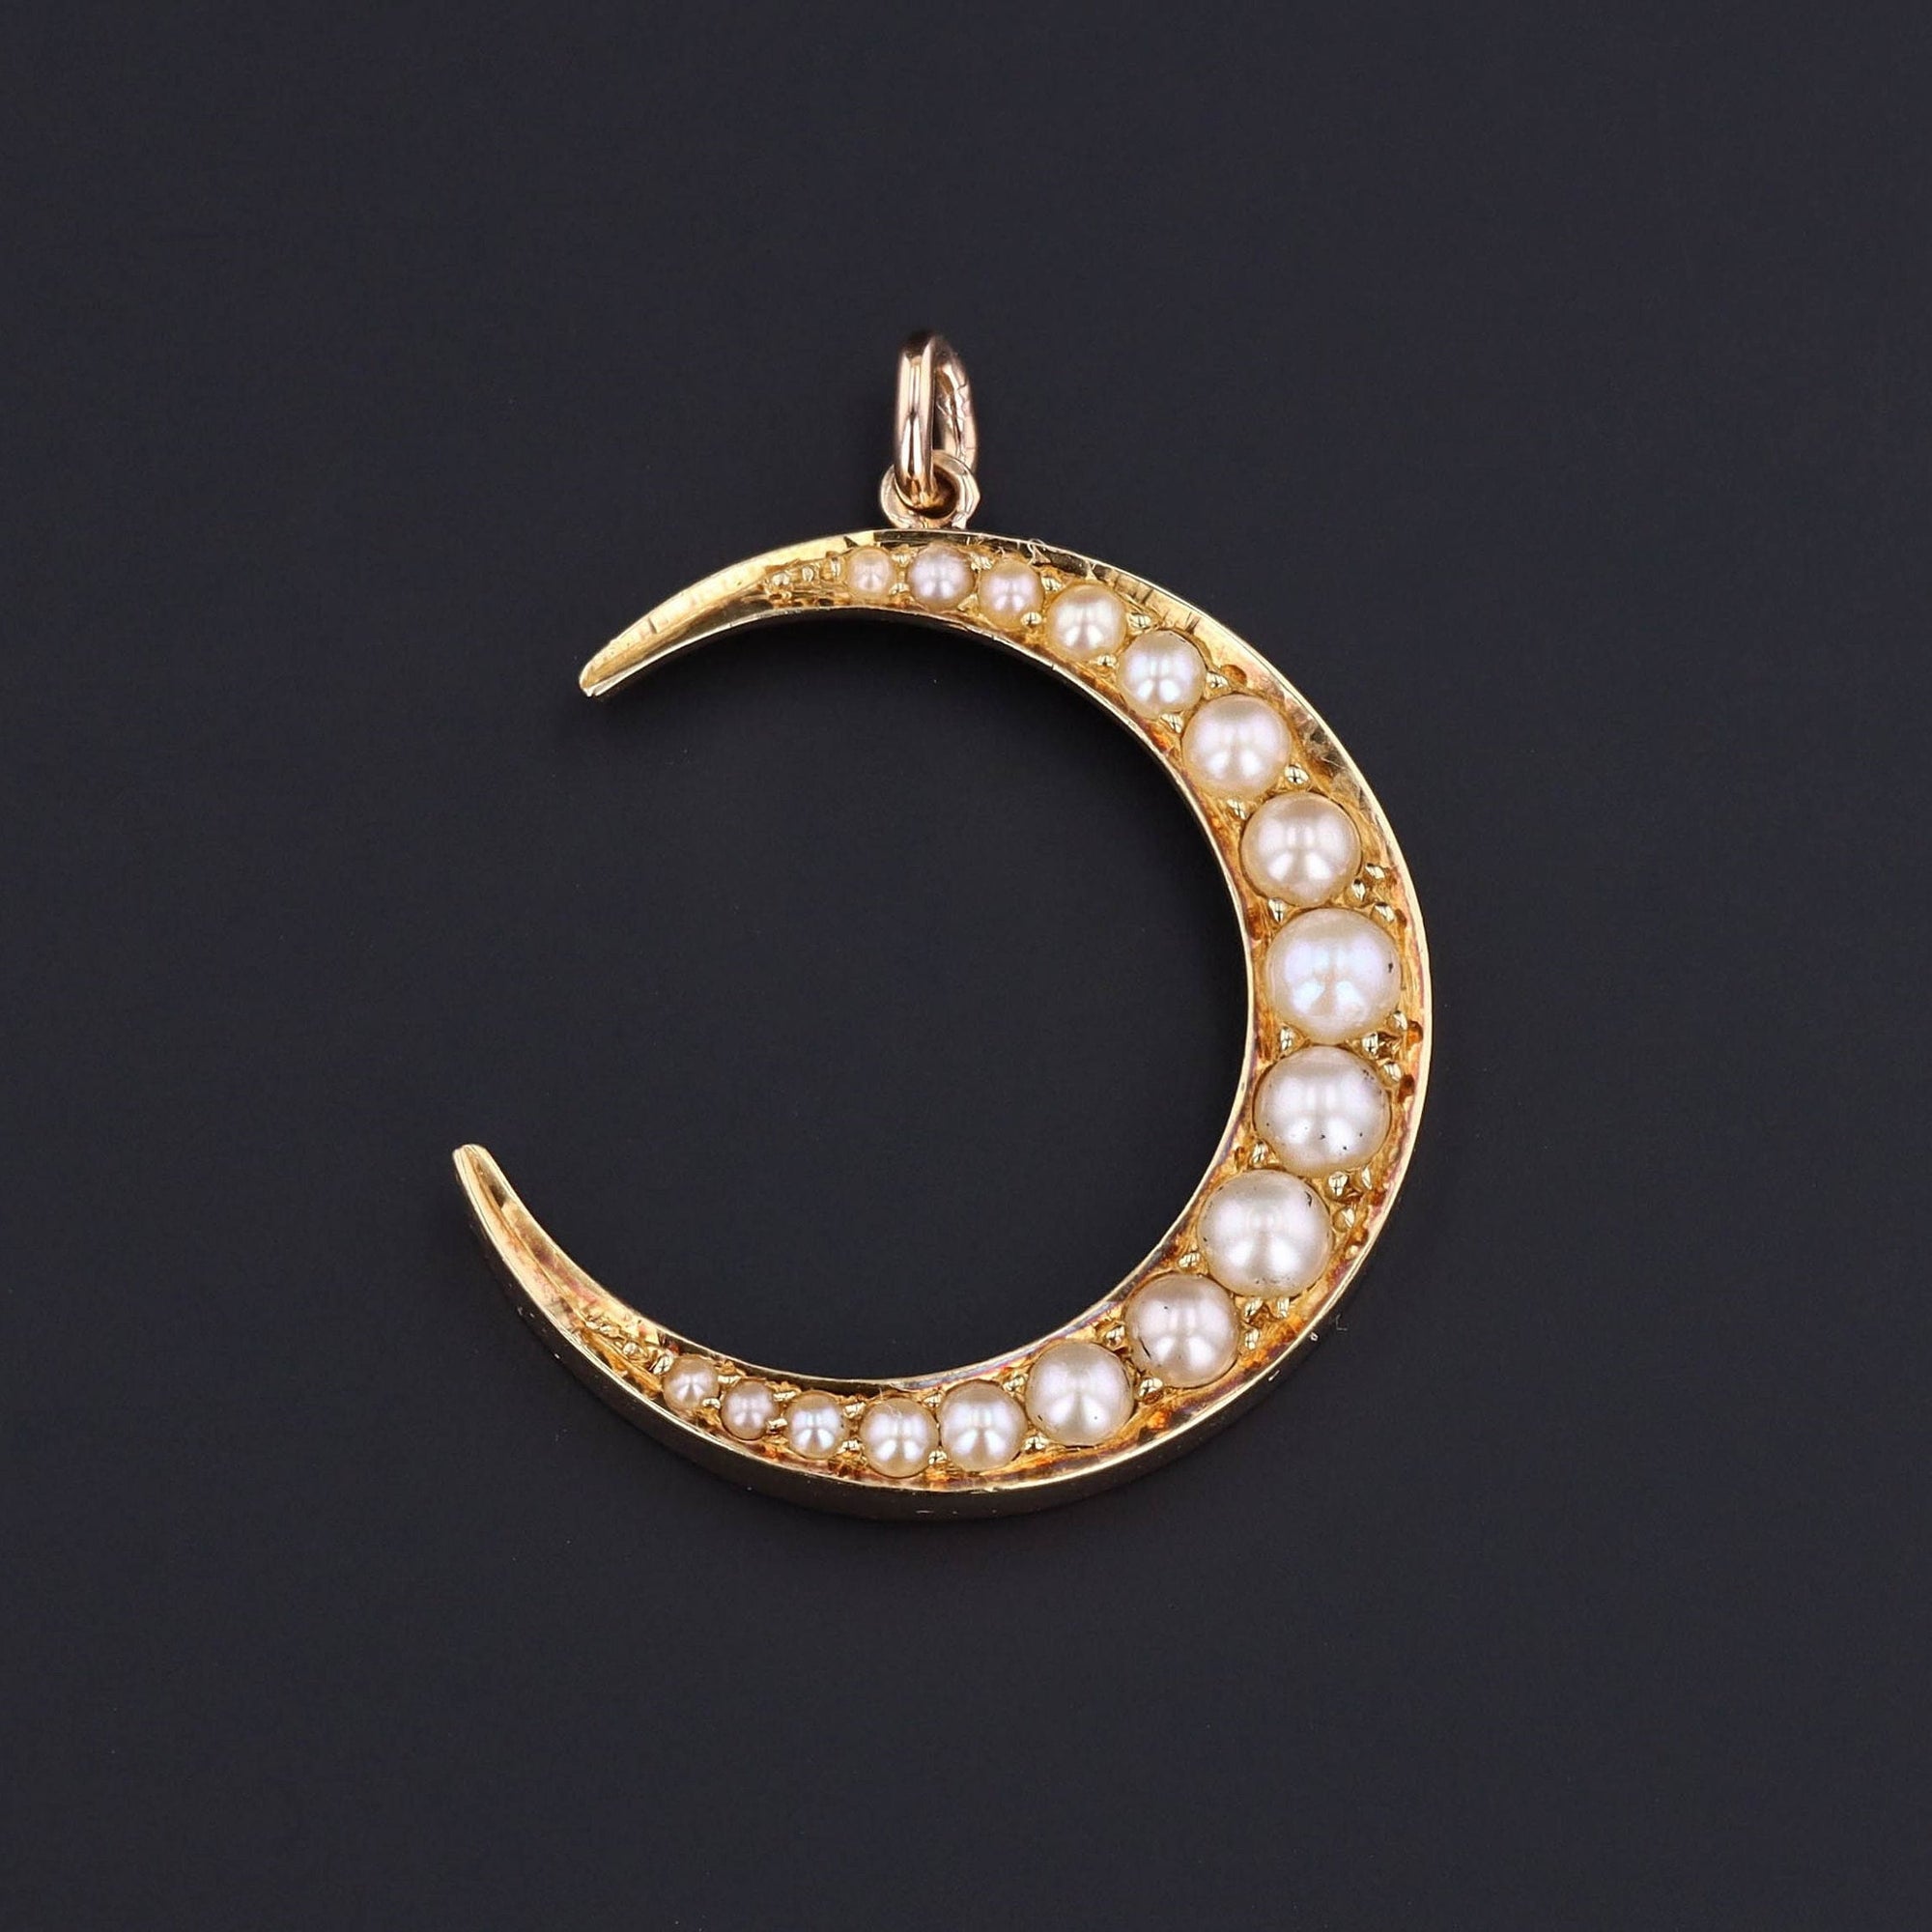 14k Gold & Pearl Crescent Moon Pendant | Antique Pin Conversion 